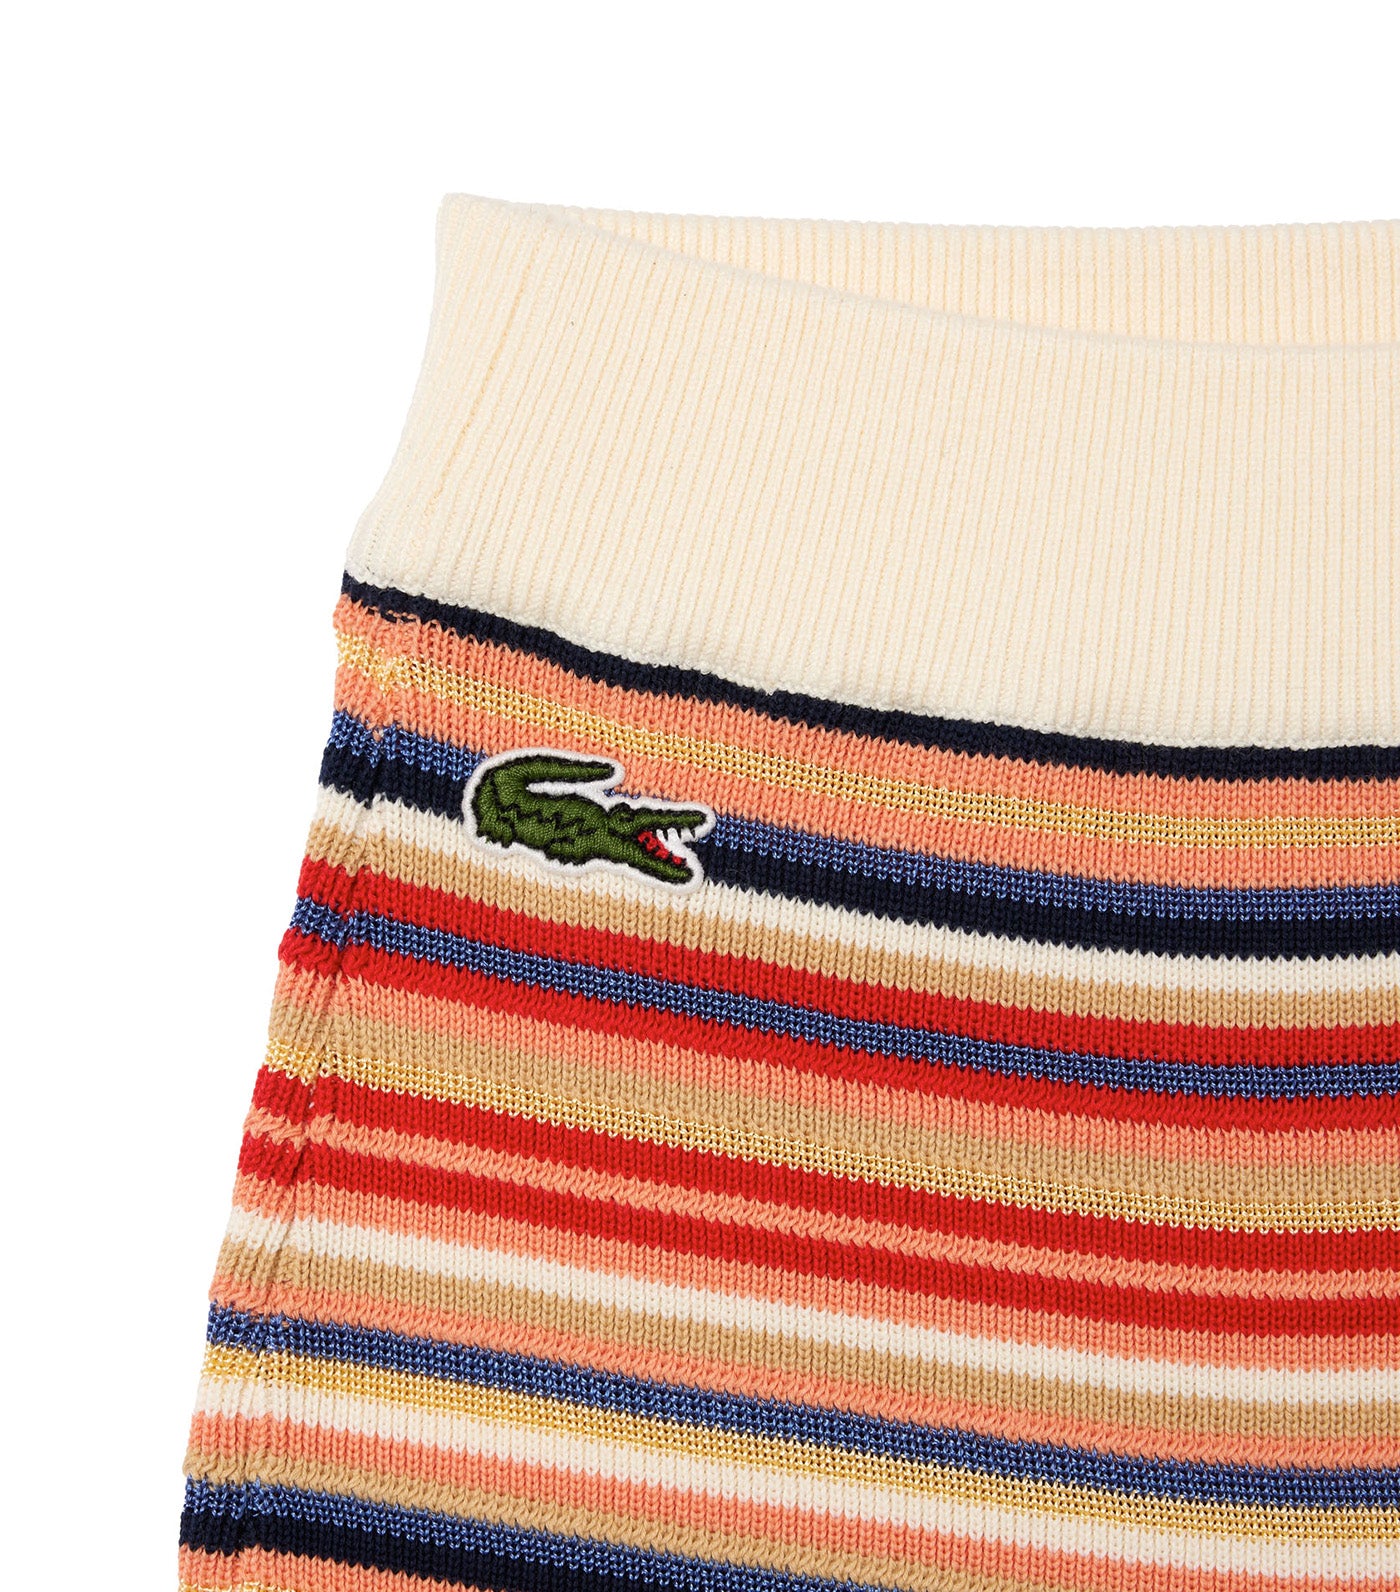 Contrast Waist Striped Cotton Shorts Lapland/Blossom-Multicolor